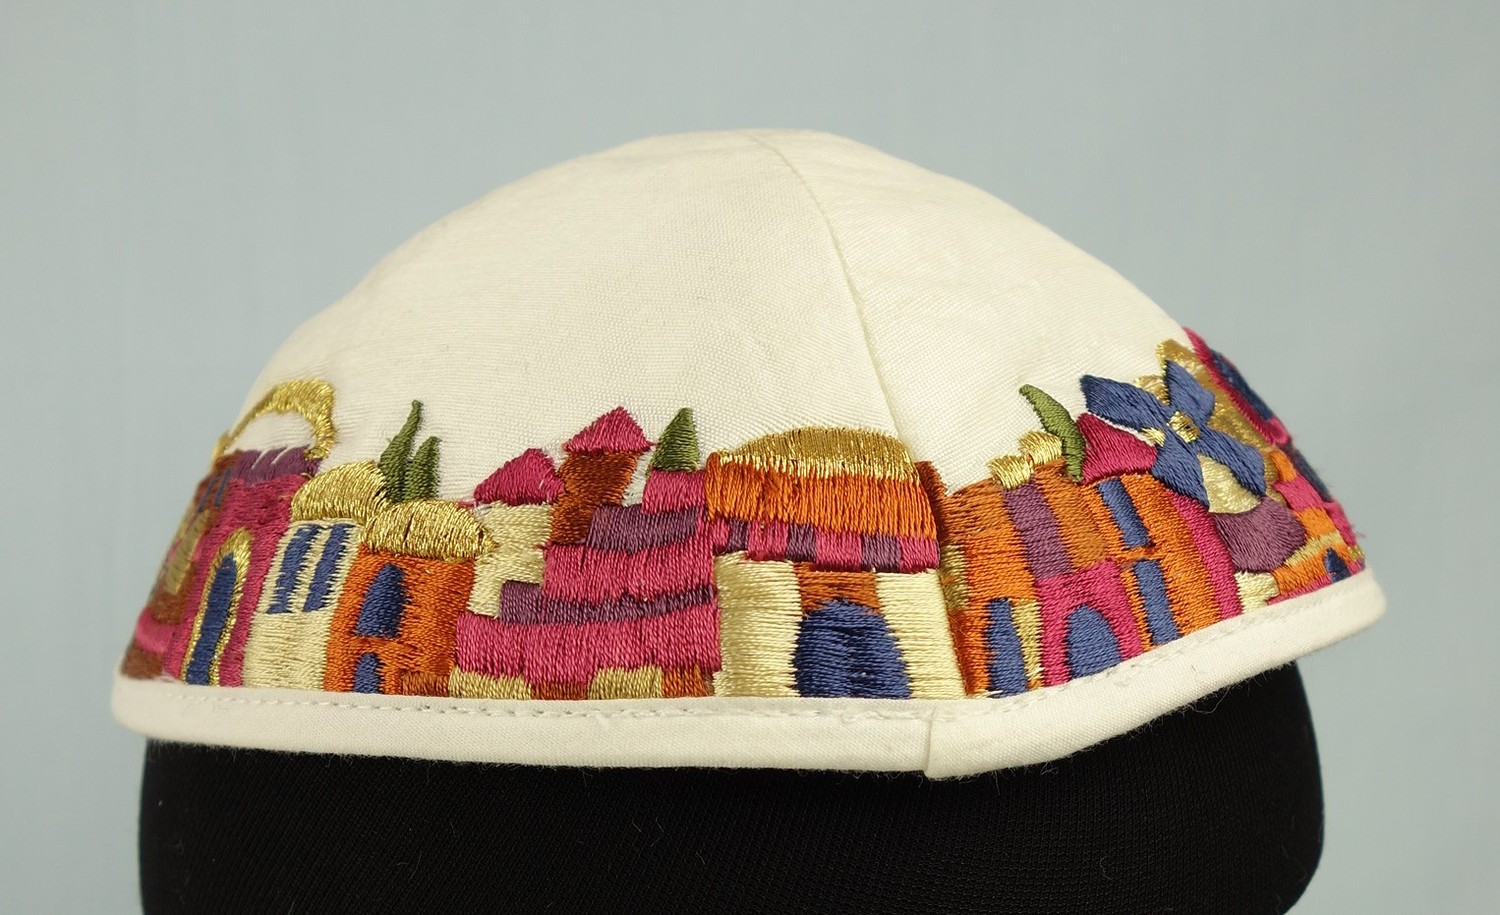 Jewish skullcap (kippa) with a stylised depiction of Jerusalem. Israel 2016.